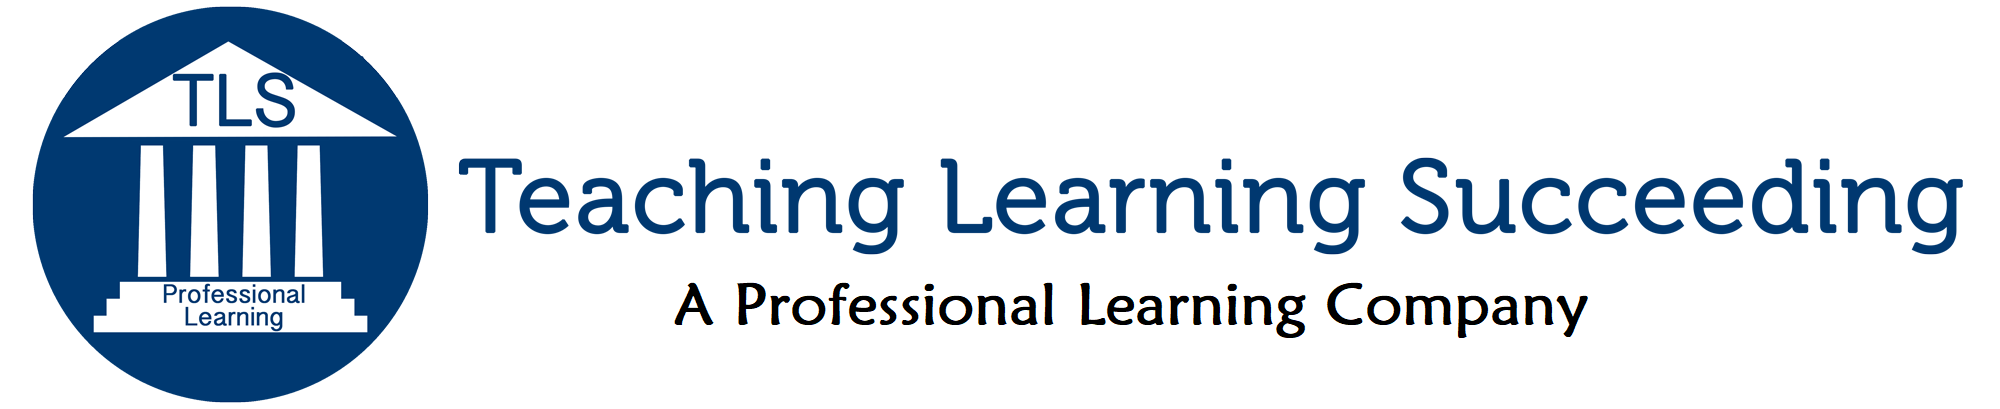 TLS Teaching Learning Succeeding